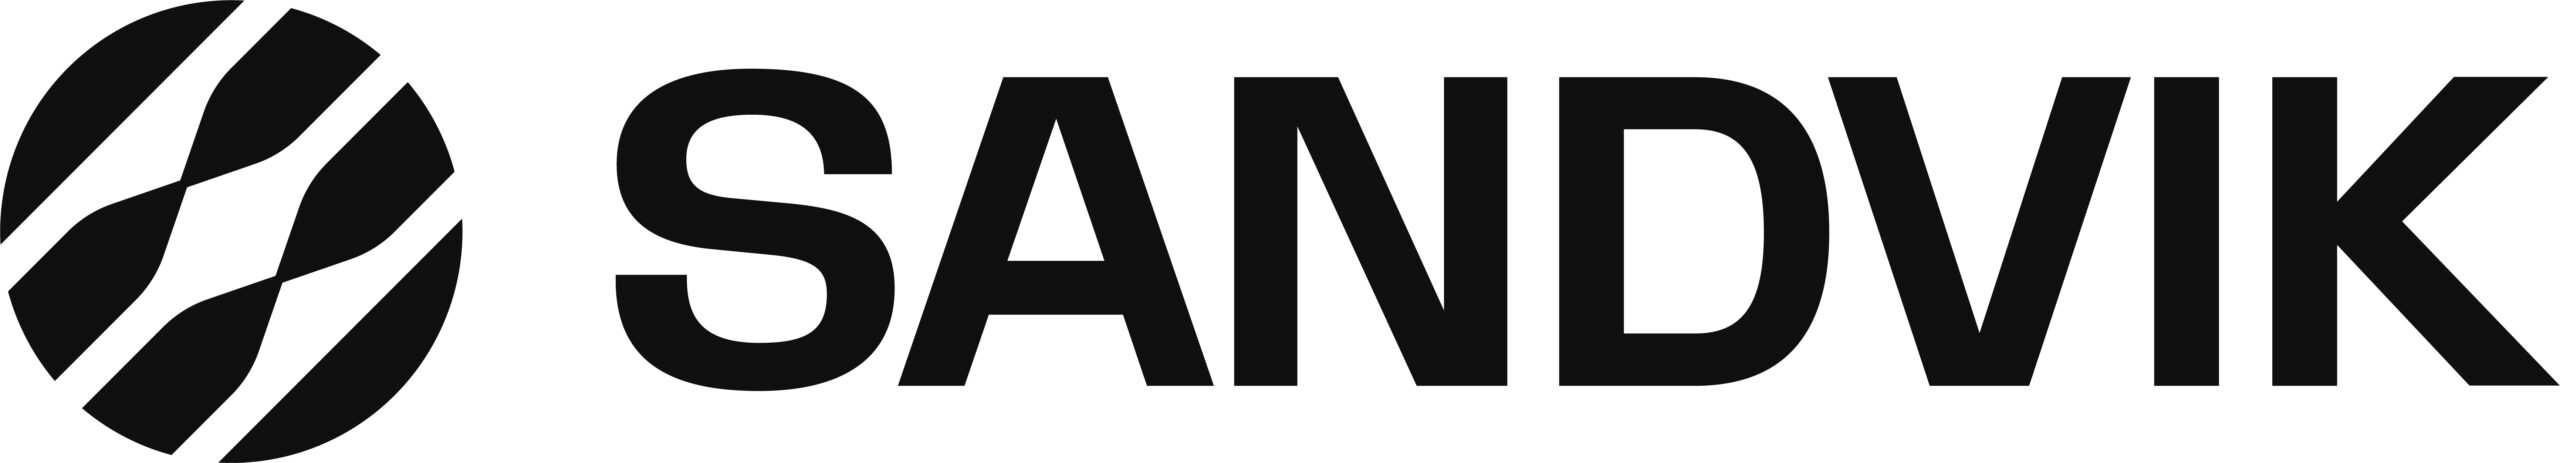 sandvik_logotype_black_rgb300